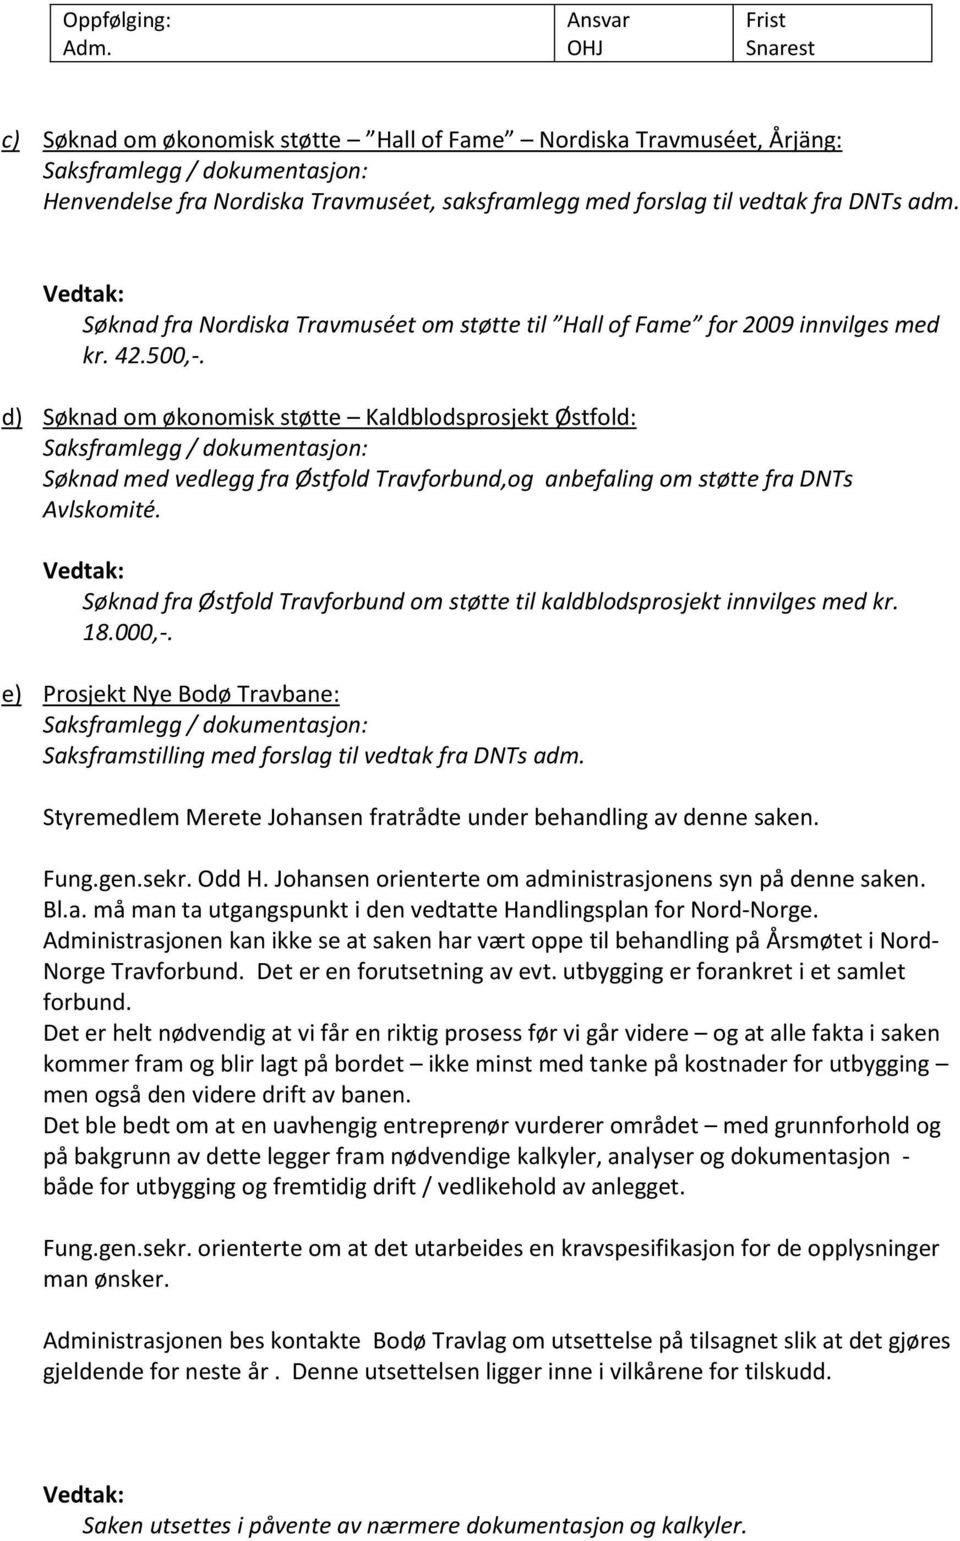 d) Søknad om økonomisk støtte Kaldblodsprosjekt Østfold: Søknad med vedlegg fra Østfold Travforbund,og anbefaling om støtte fra DNTs Avlskomité.